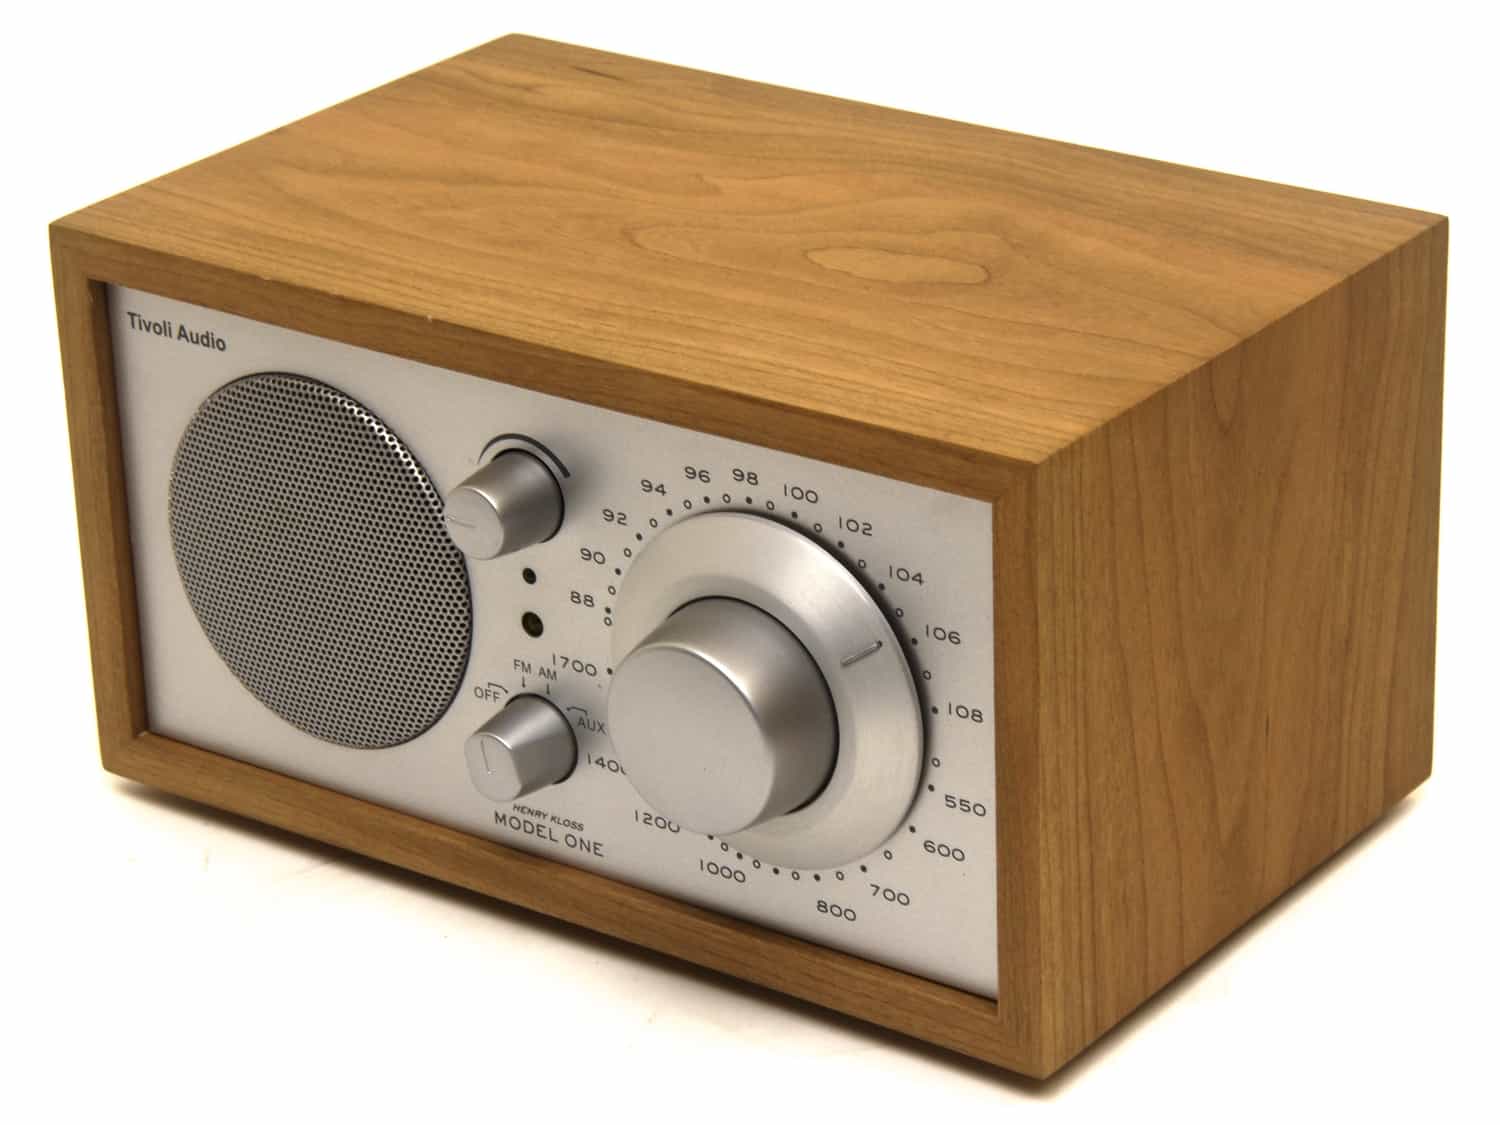 Tivoli Audio Model One Review ~ | Gadget Review